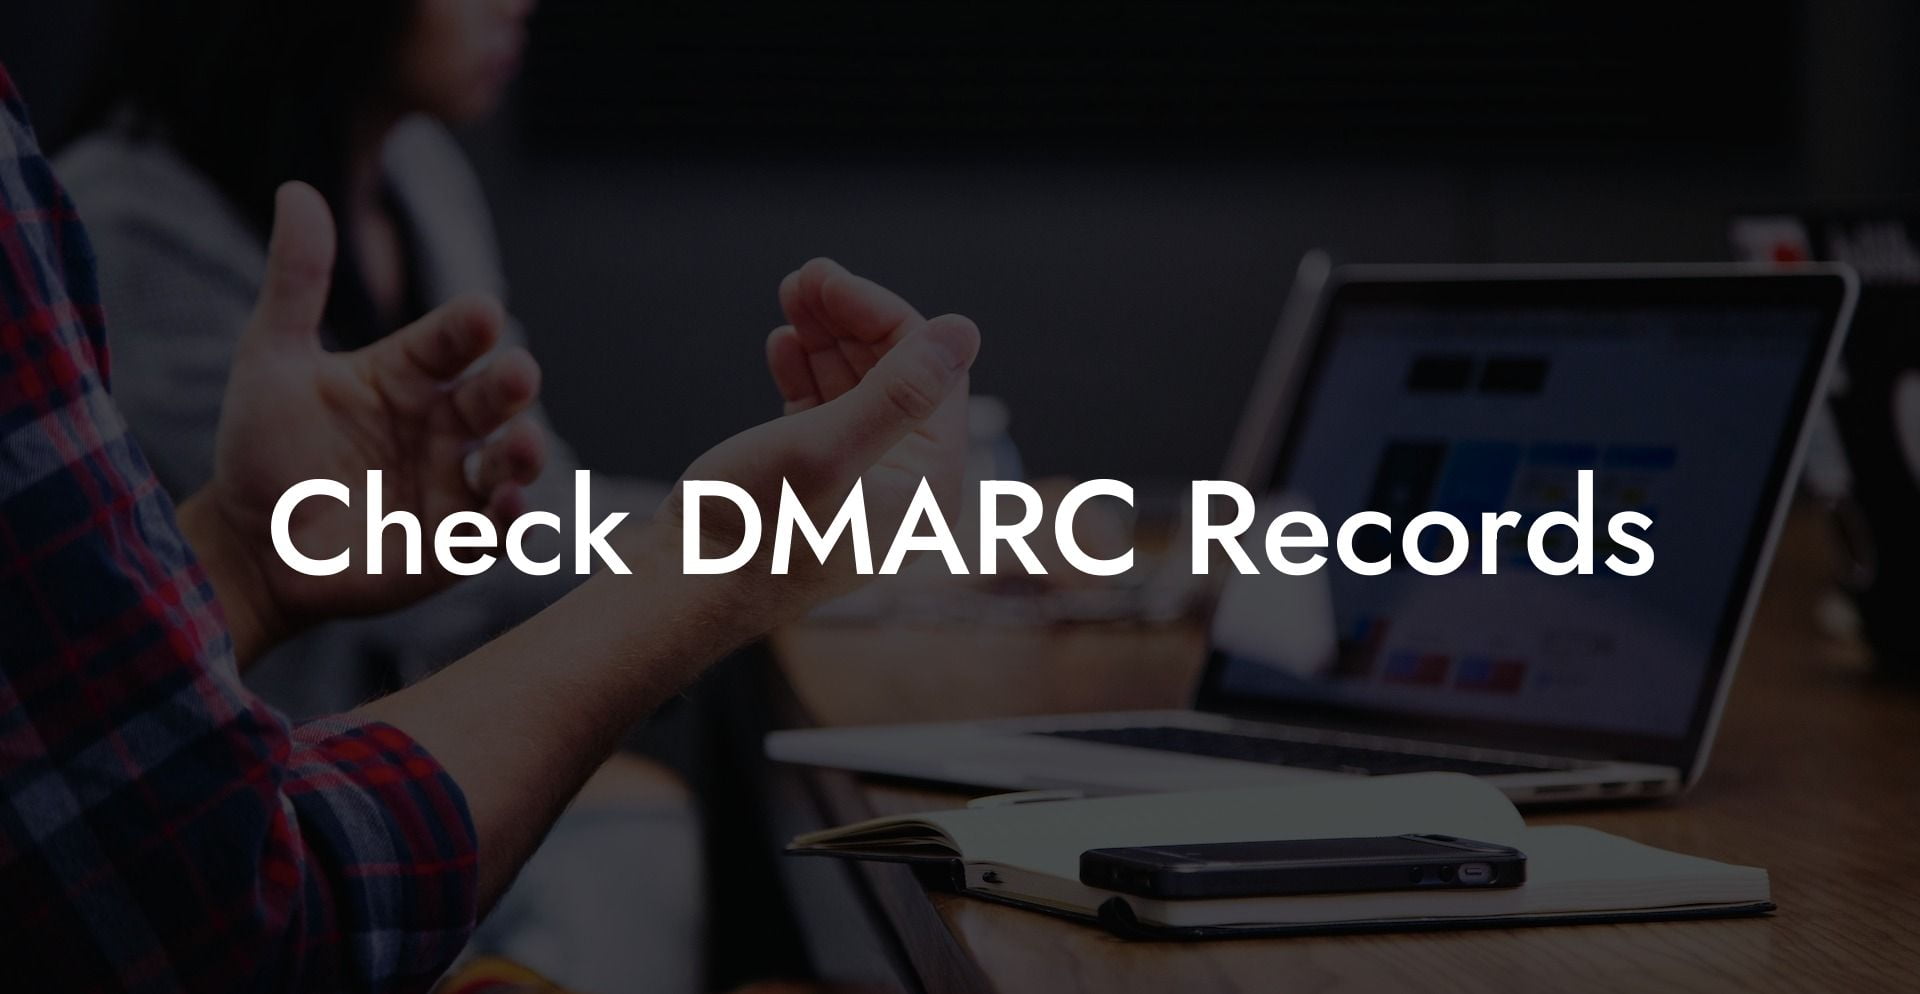 Check DMARC Records